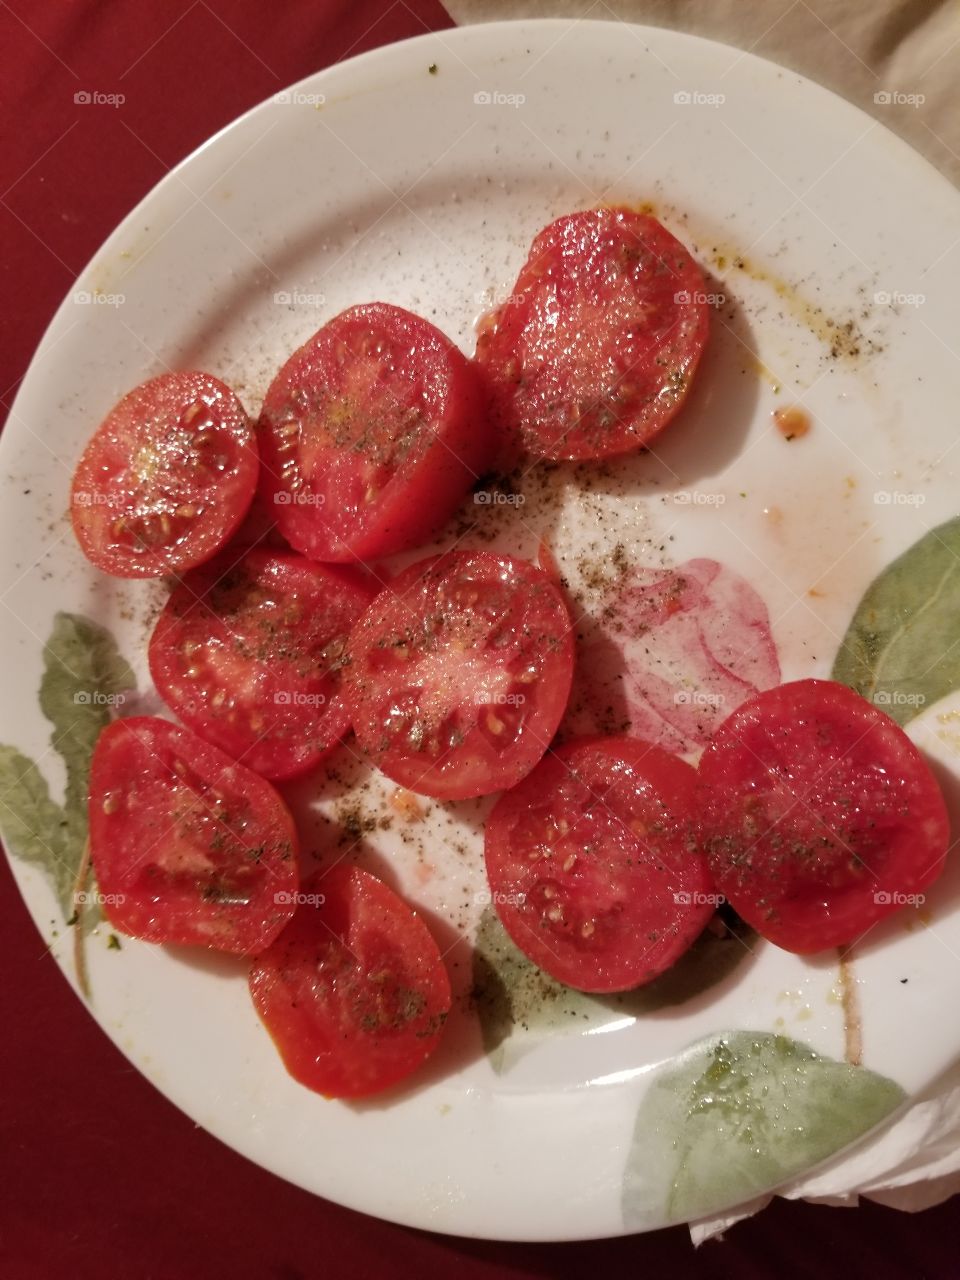 tomato goodness